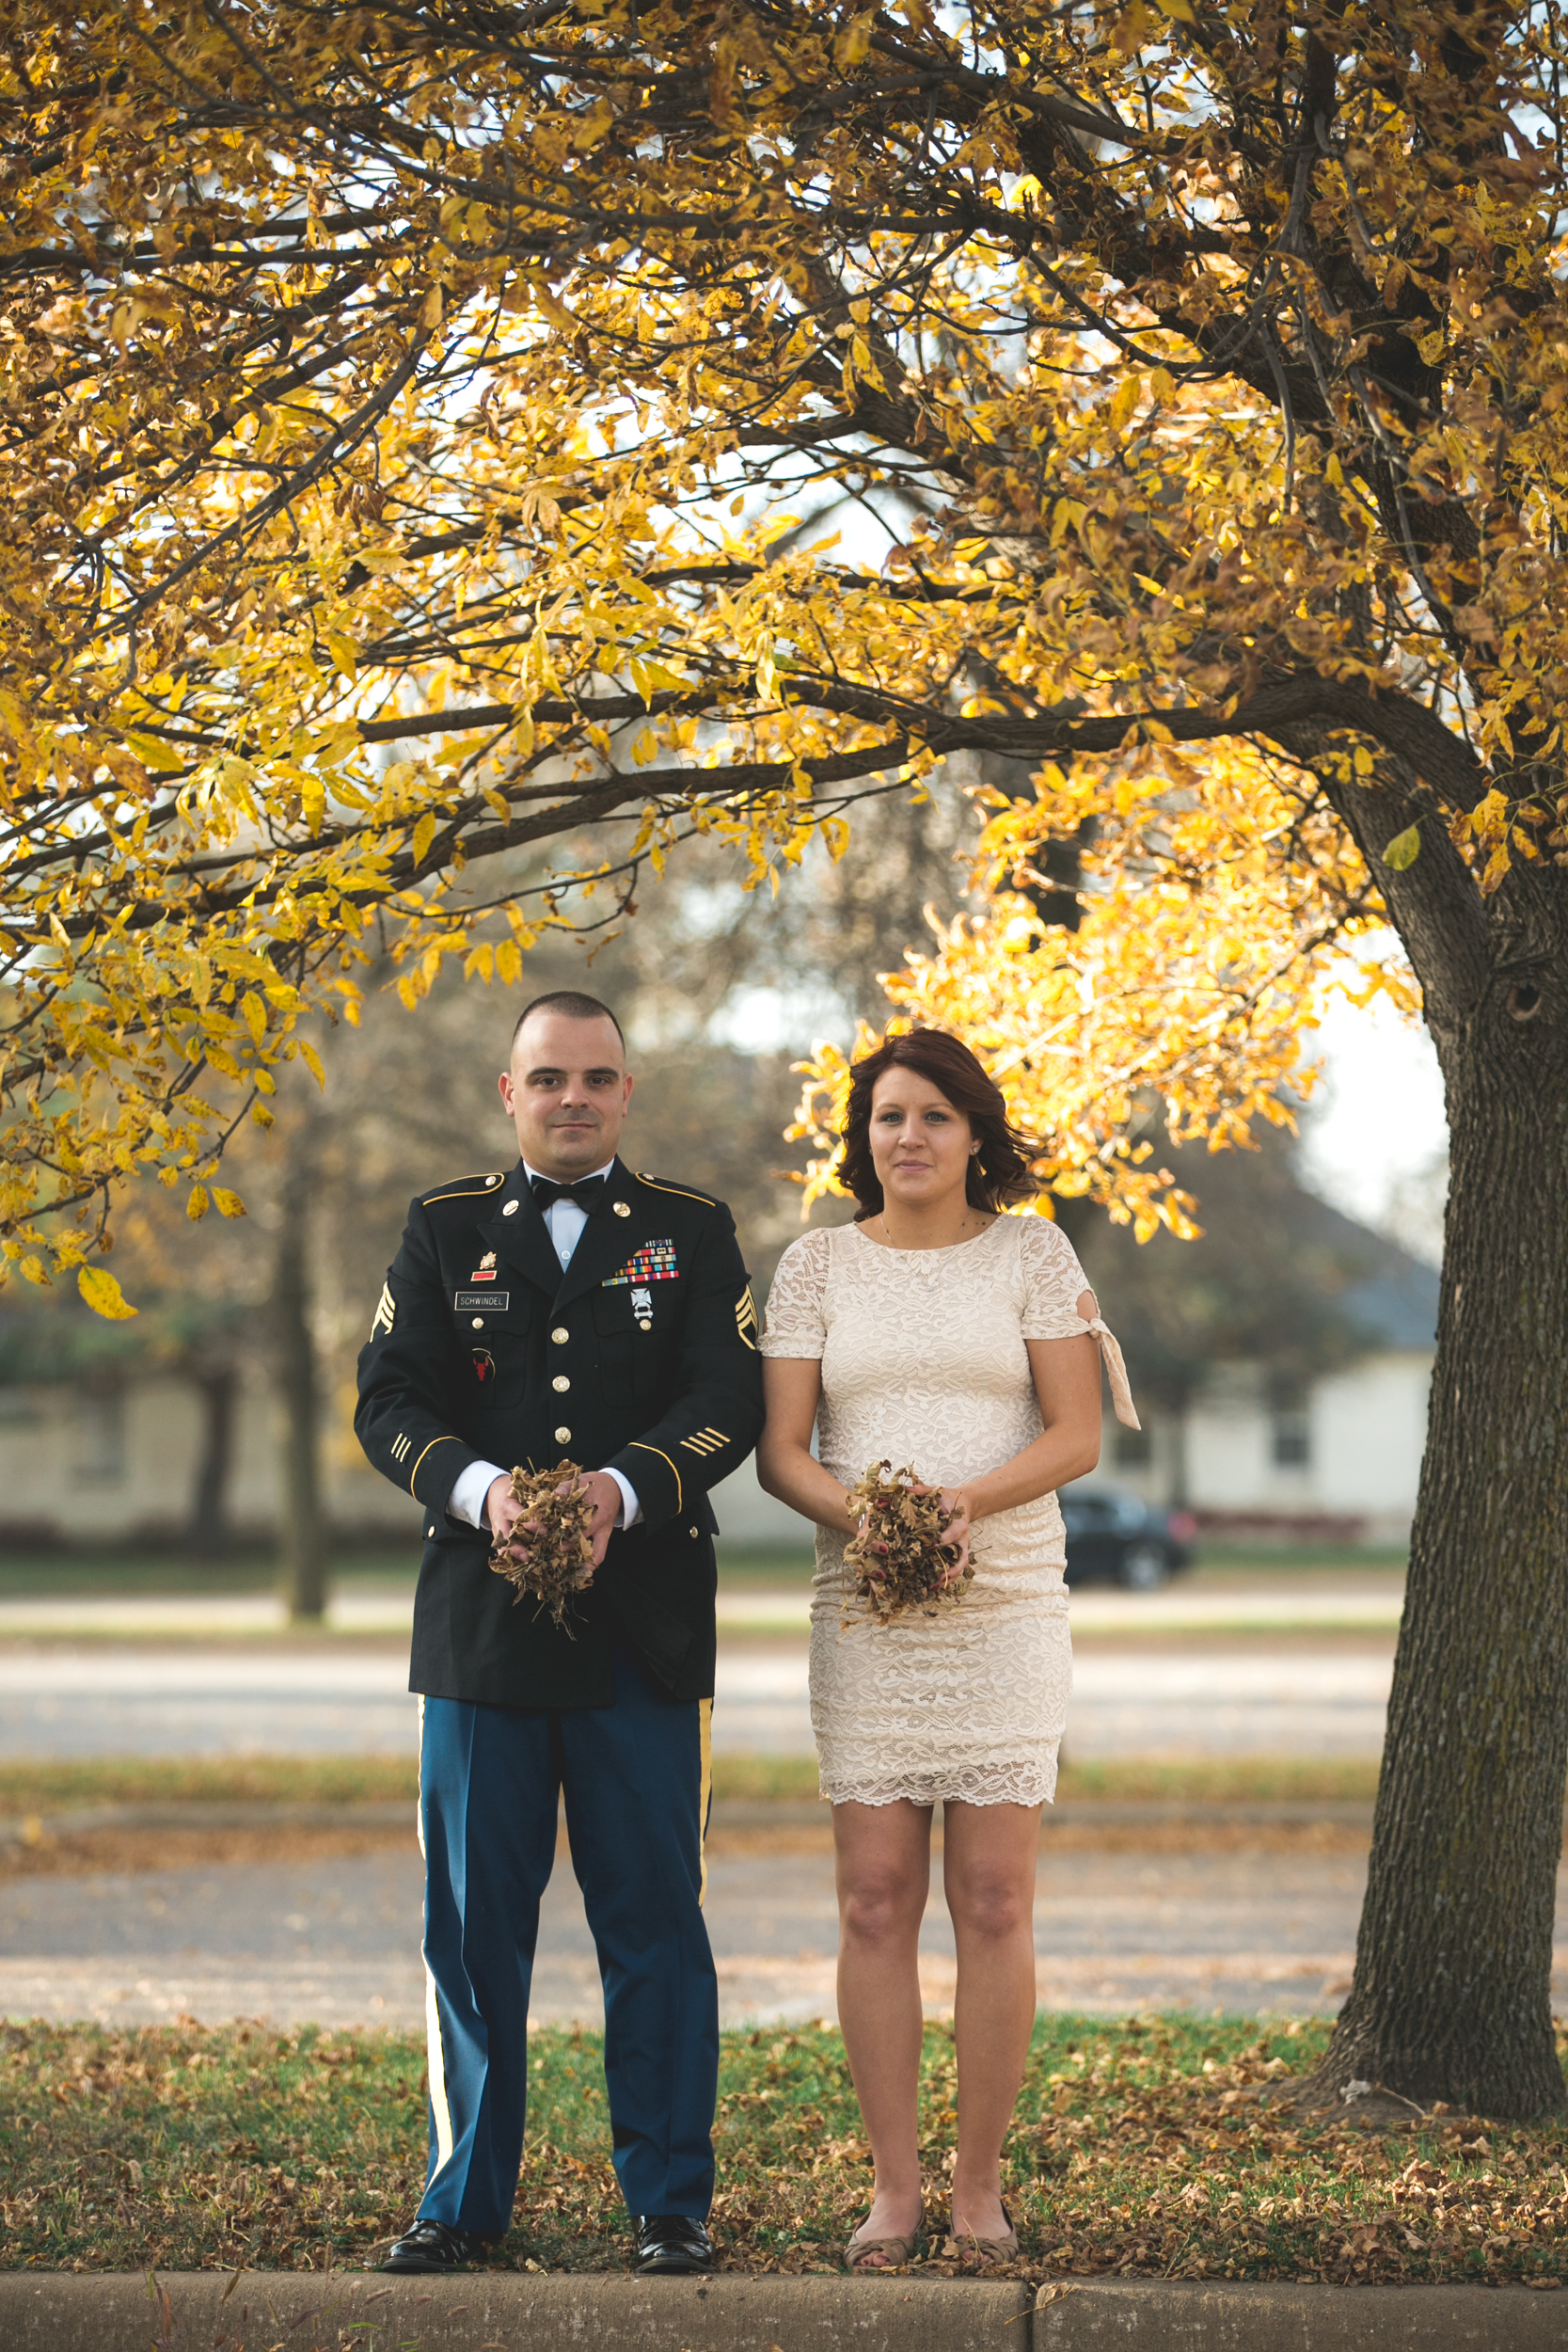 Fort Snelling Elopement St. Paul, MN, Fort Snelling Elopement, Military Elopement, Intimate Military Wedding, intimate elopement wedding-www.rachelsmak.com23.jpg